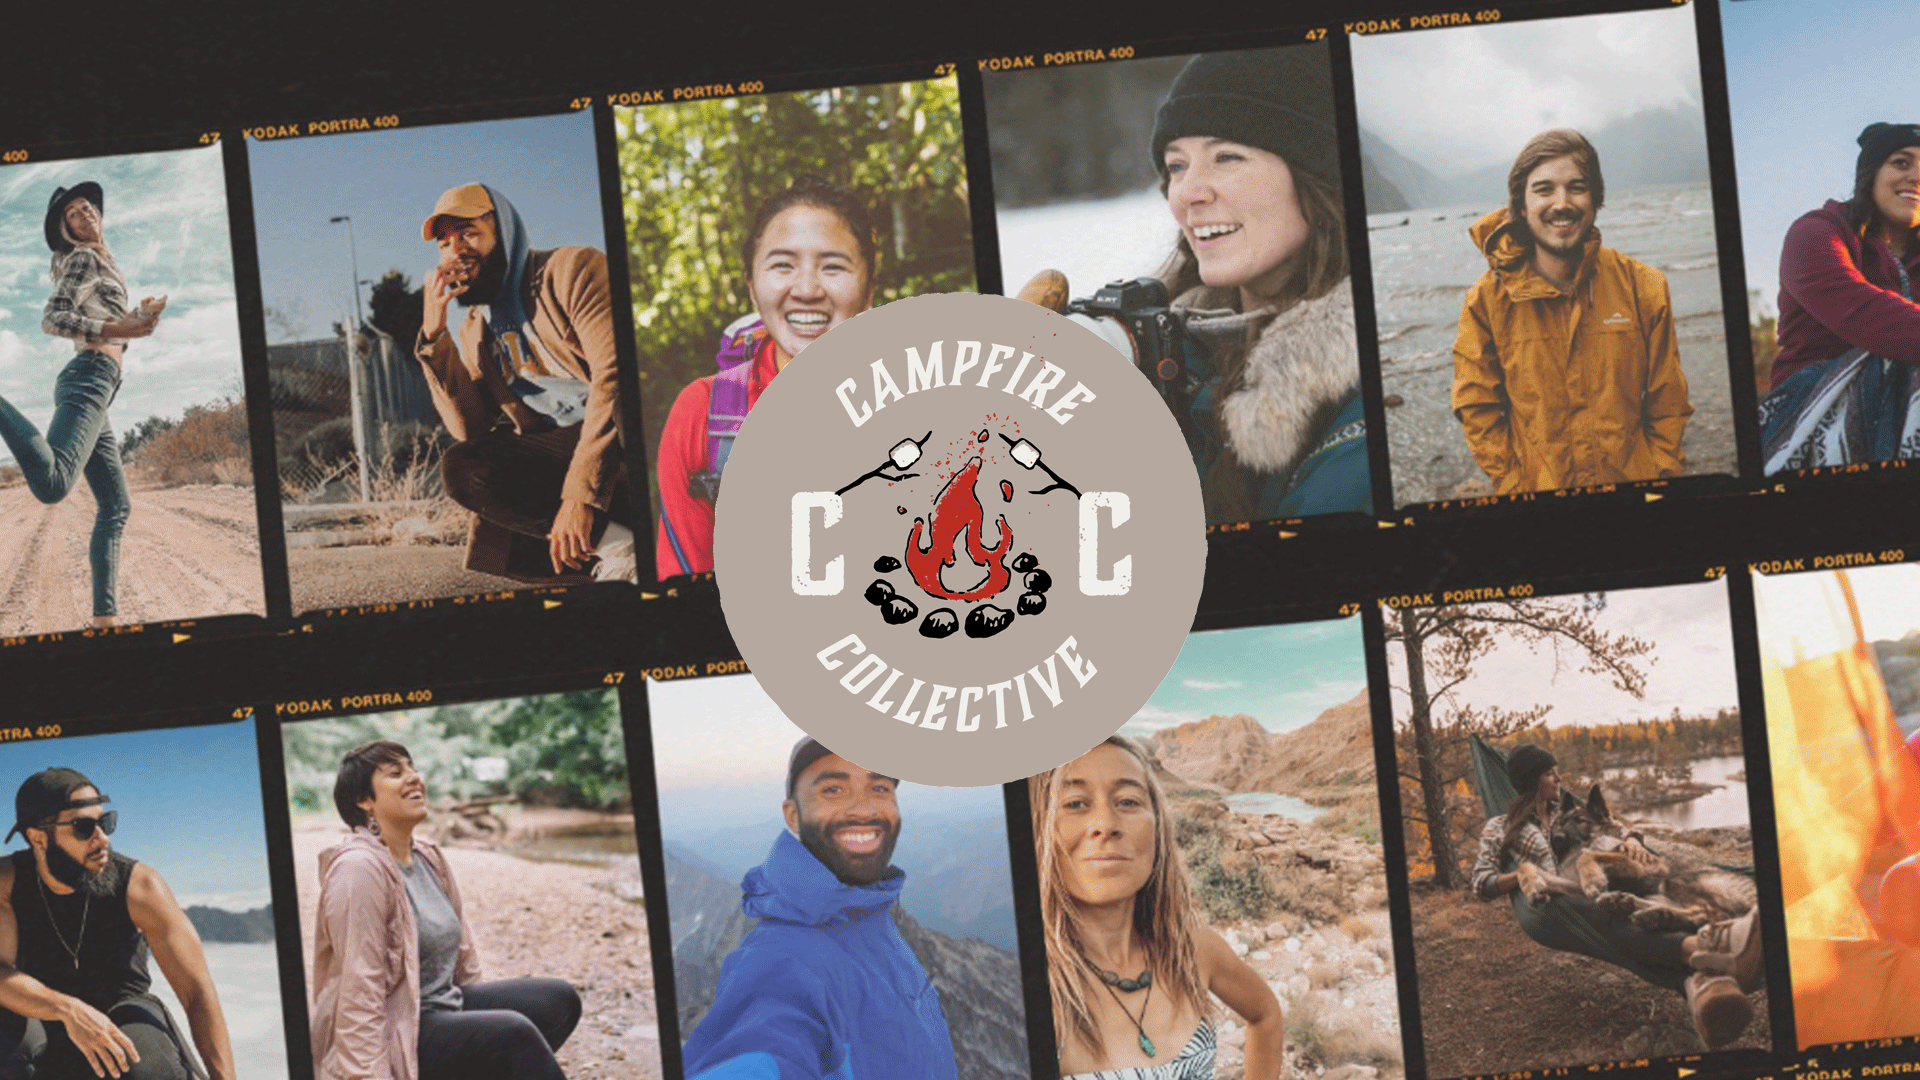 Coleman Campfire Collective